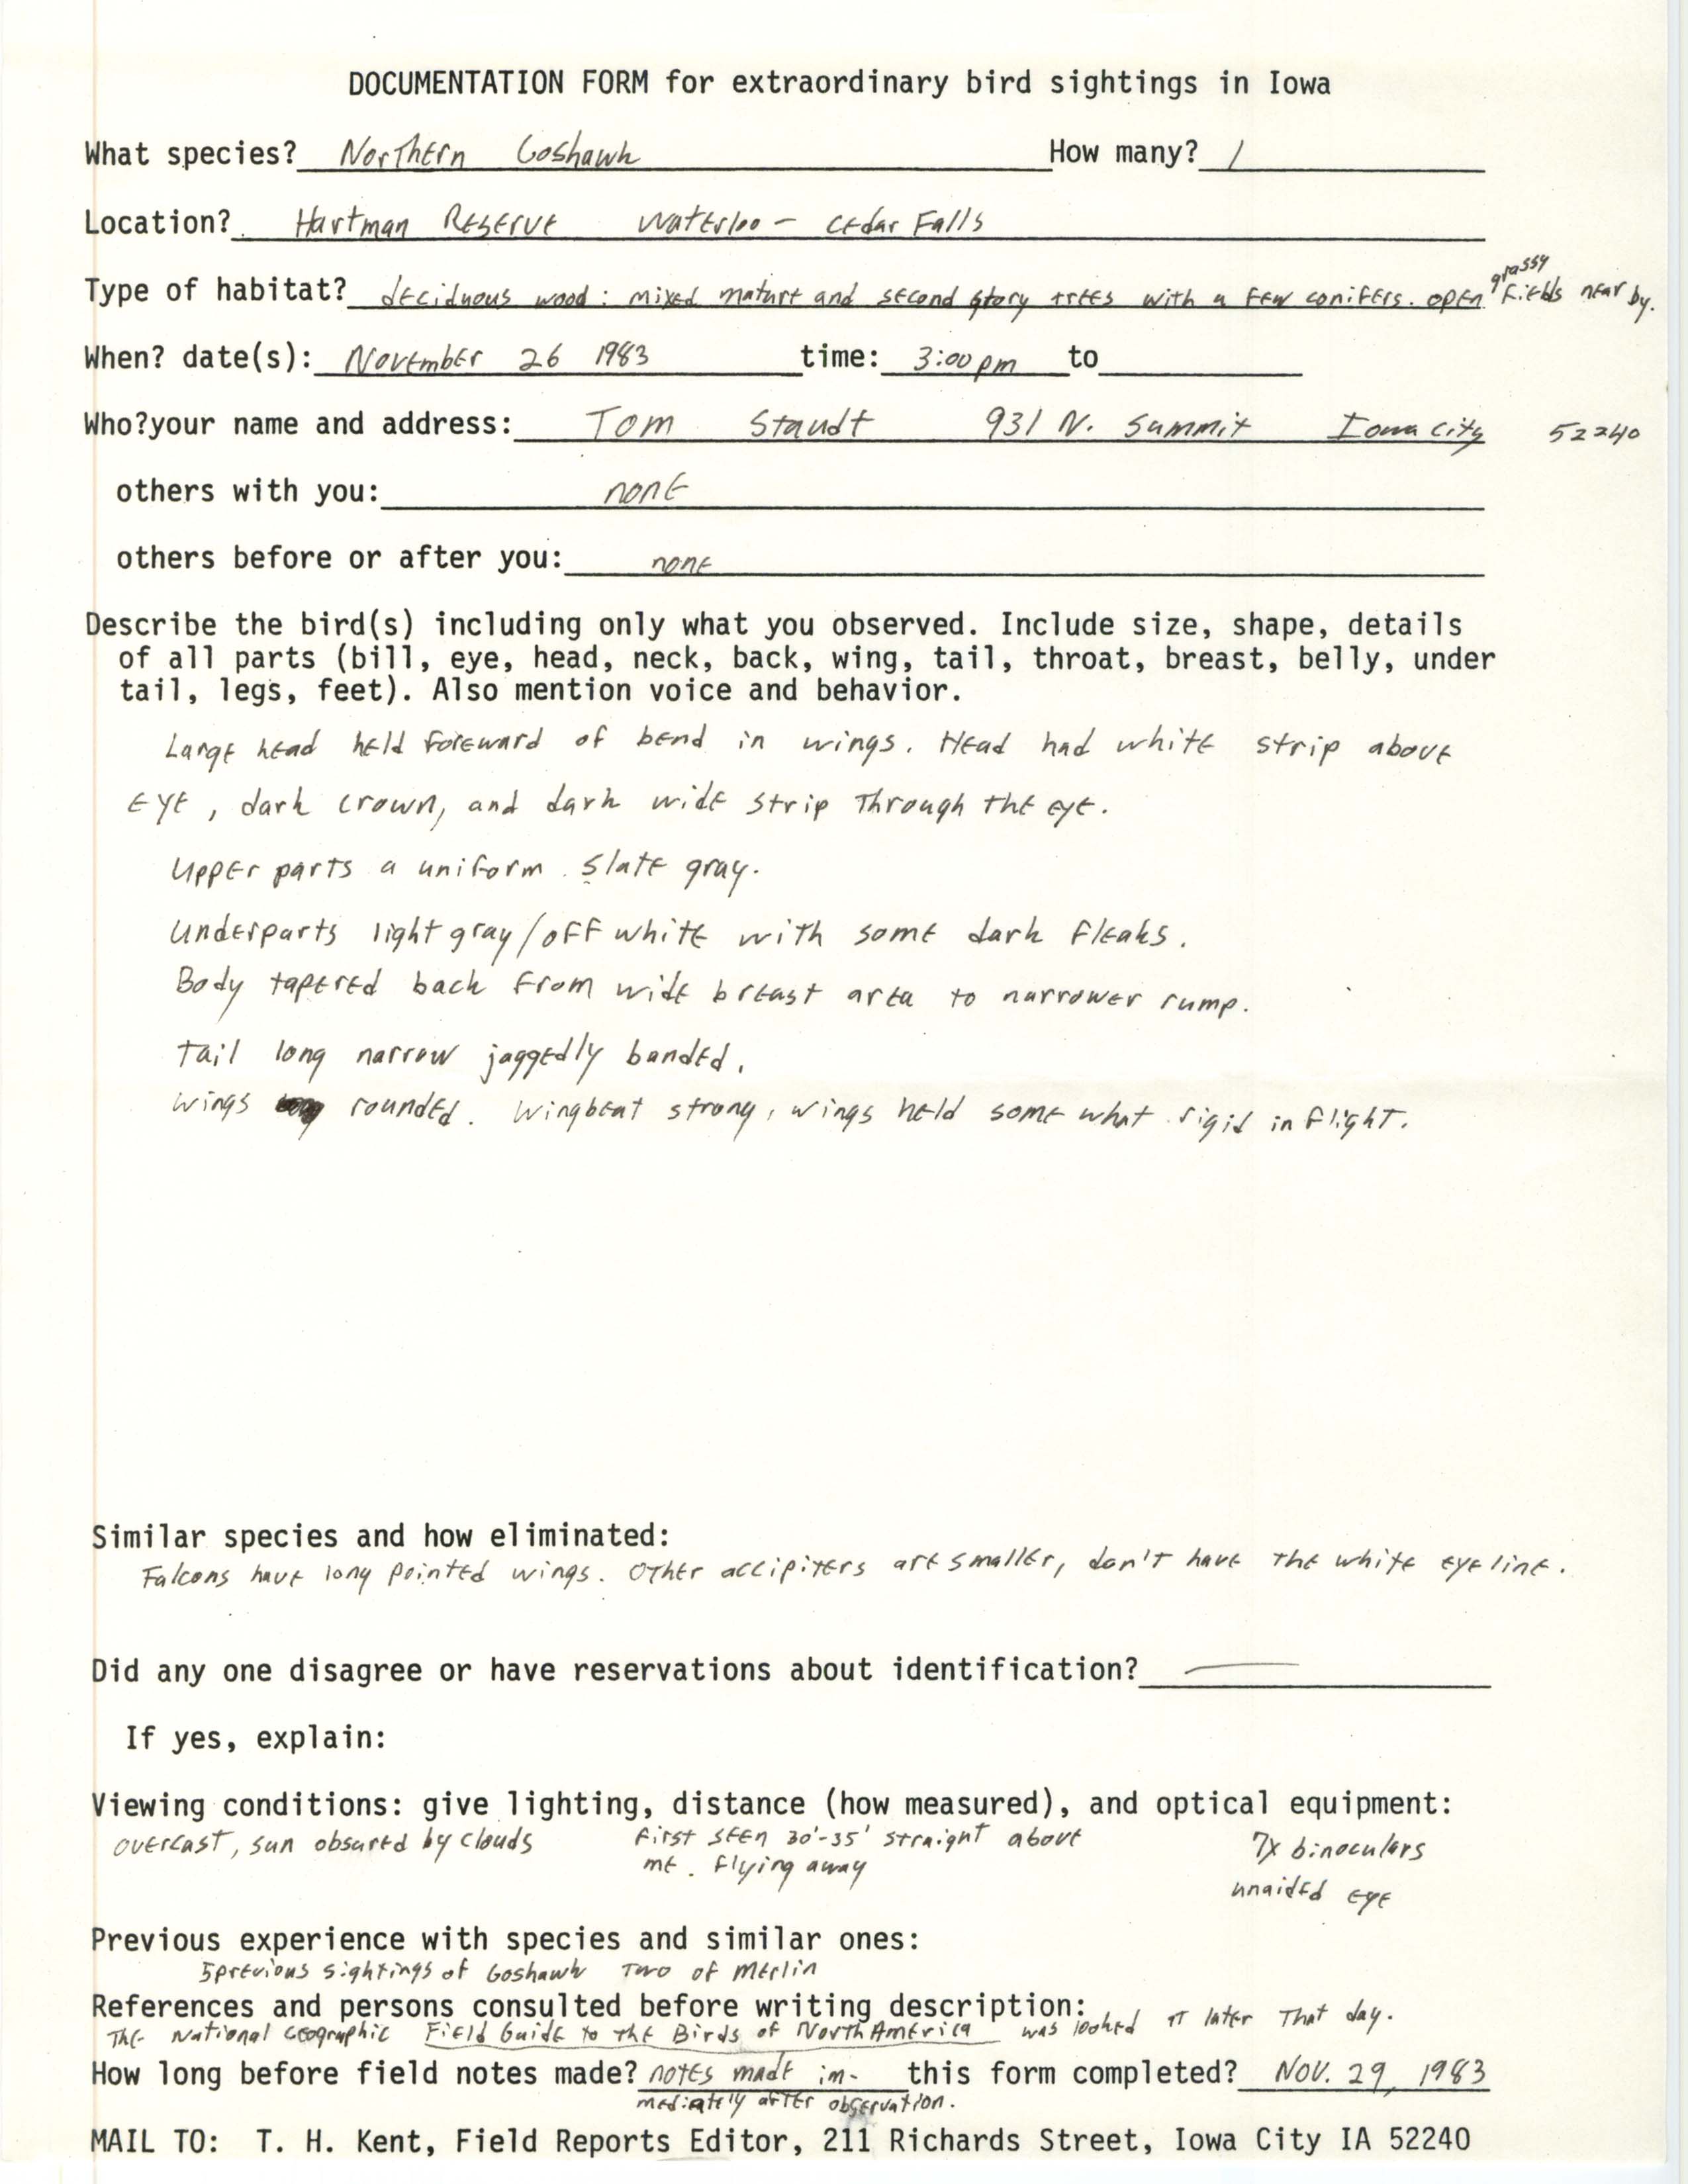 Rare bird documentation form for Northern Goshawk at Hartman Reserve, 1983